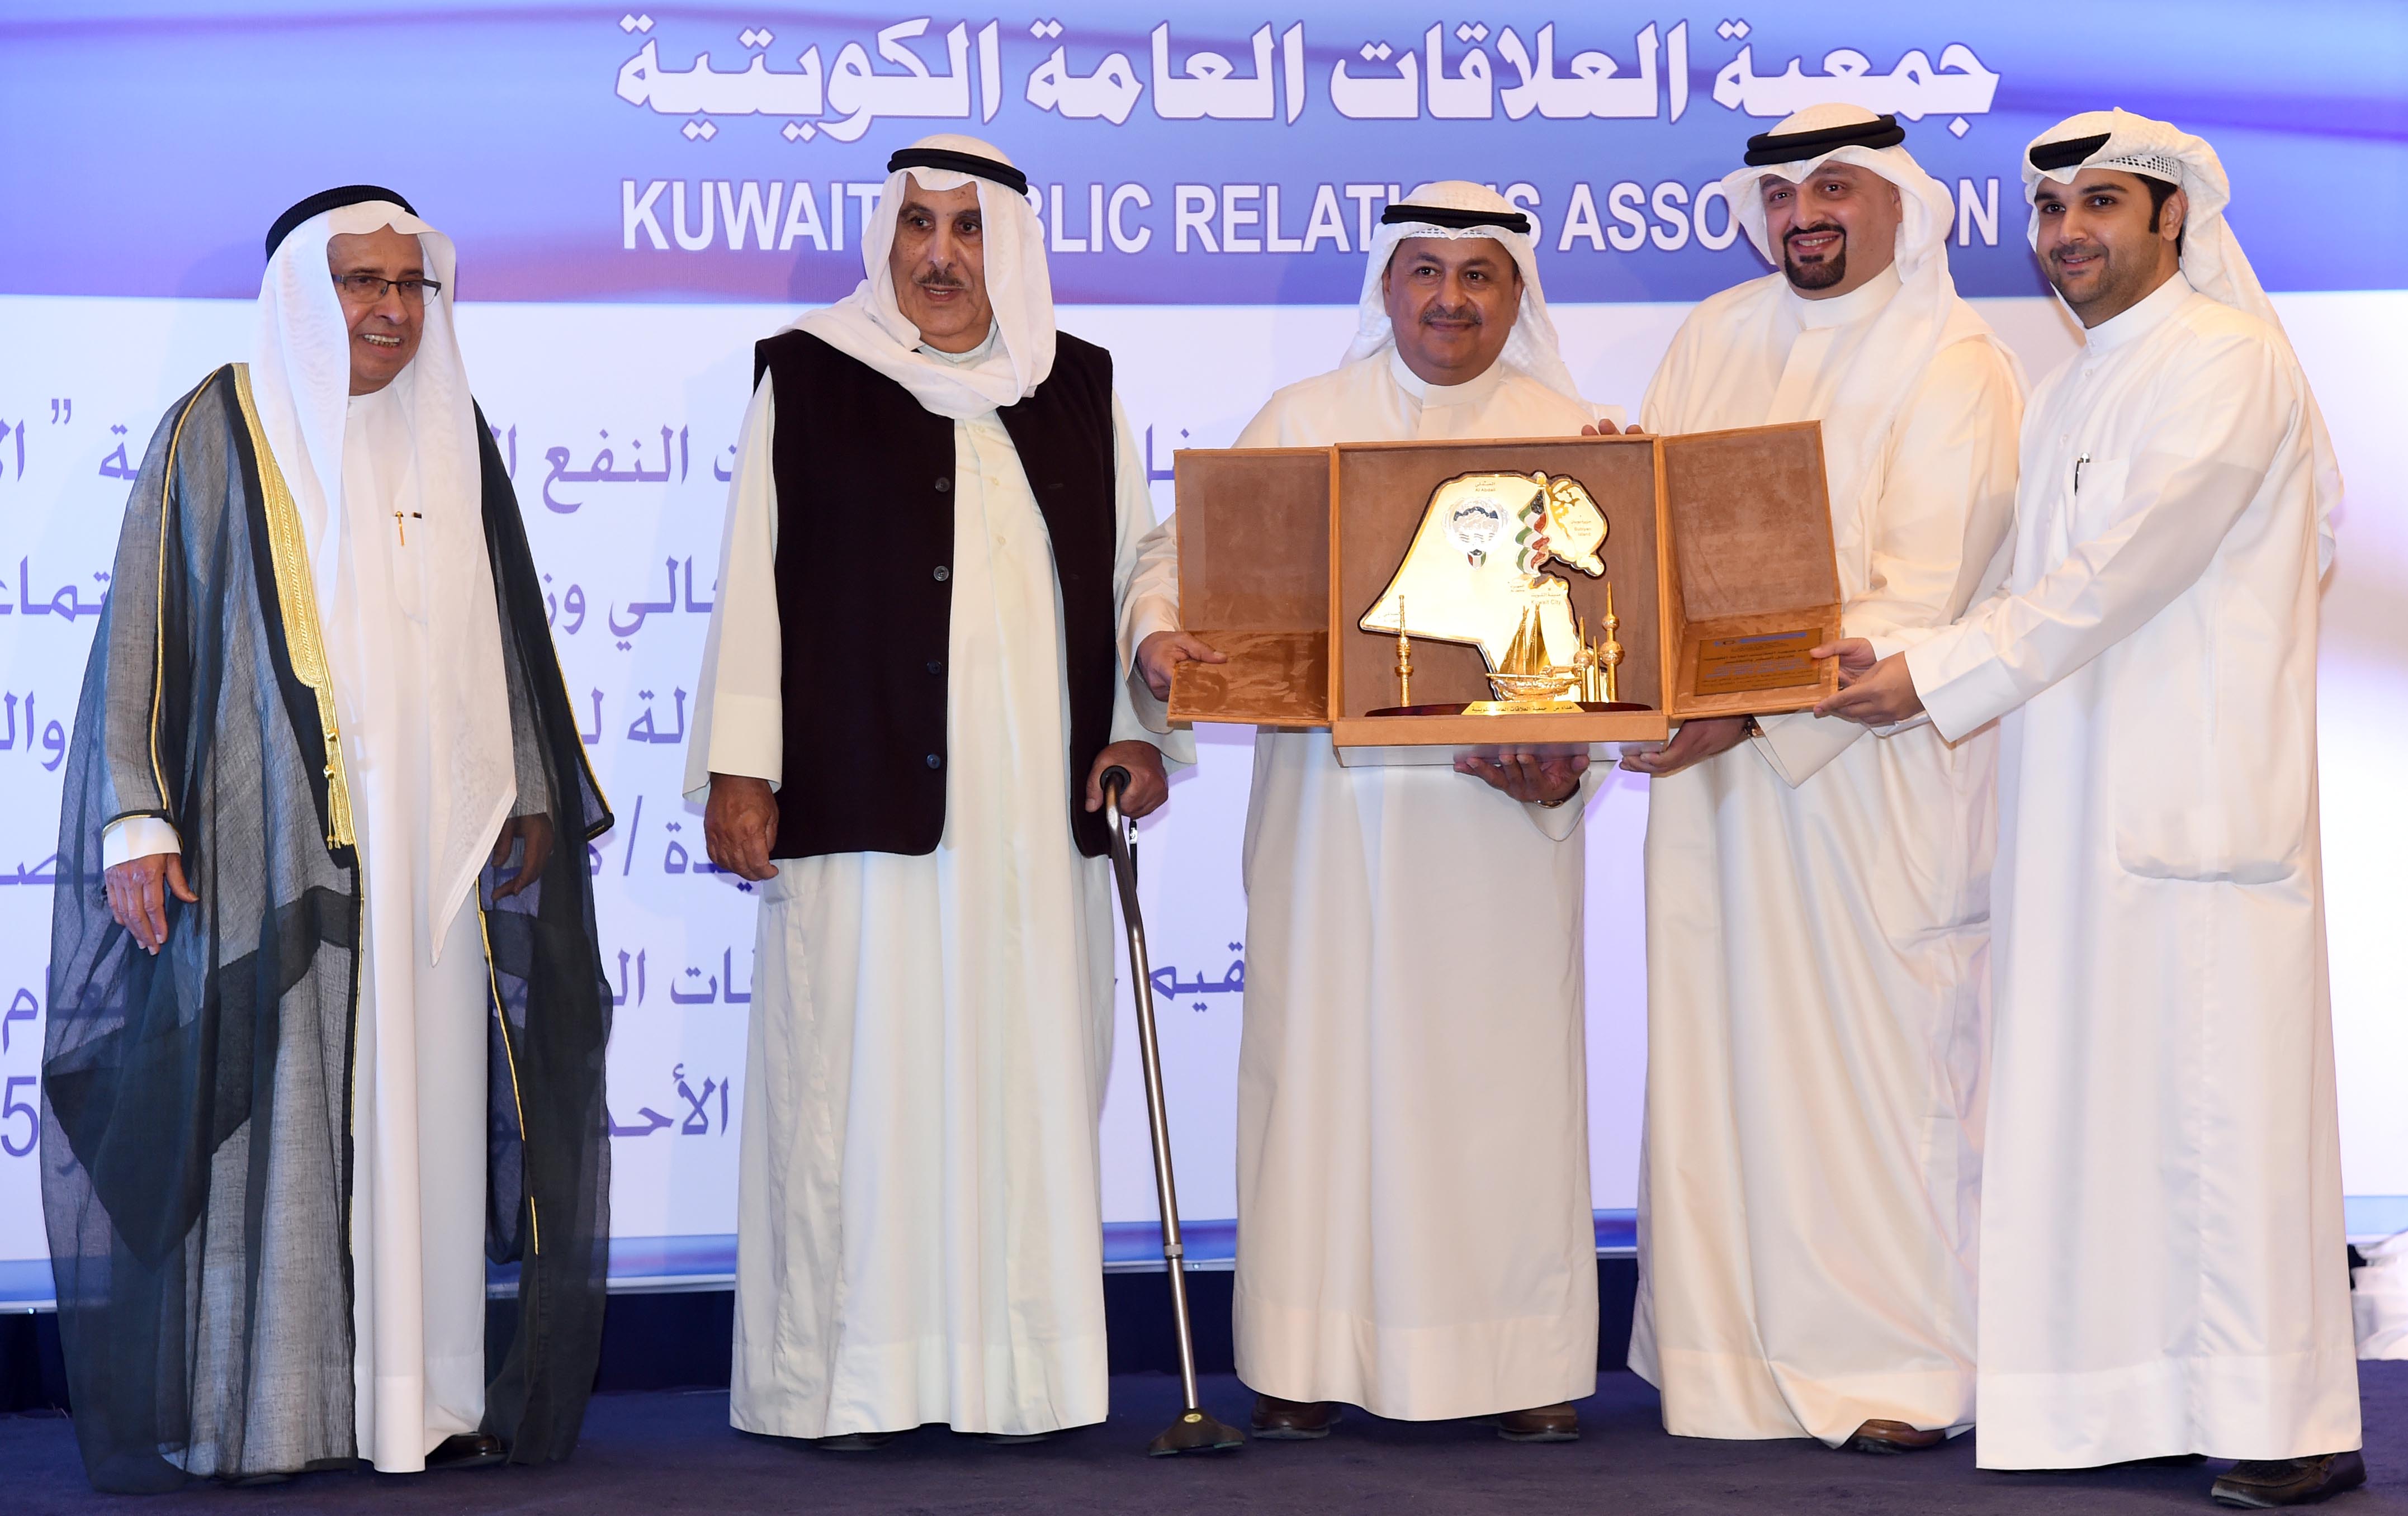 Honoring ceremony of Kuwait Public Relations Association (KPRA) for non-profit organizations